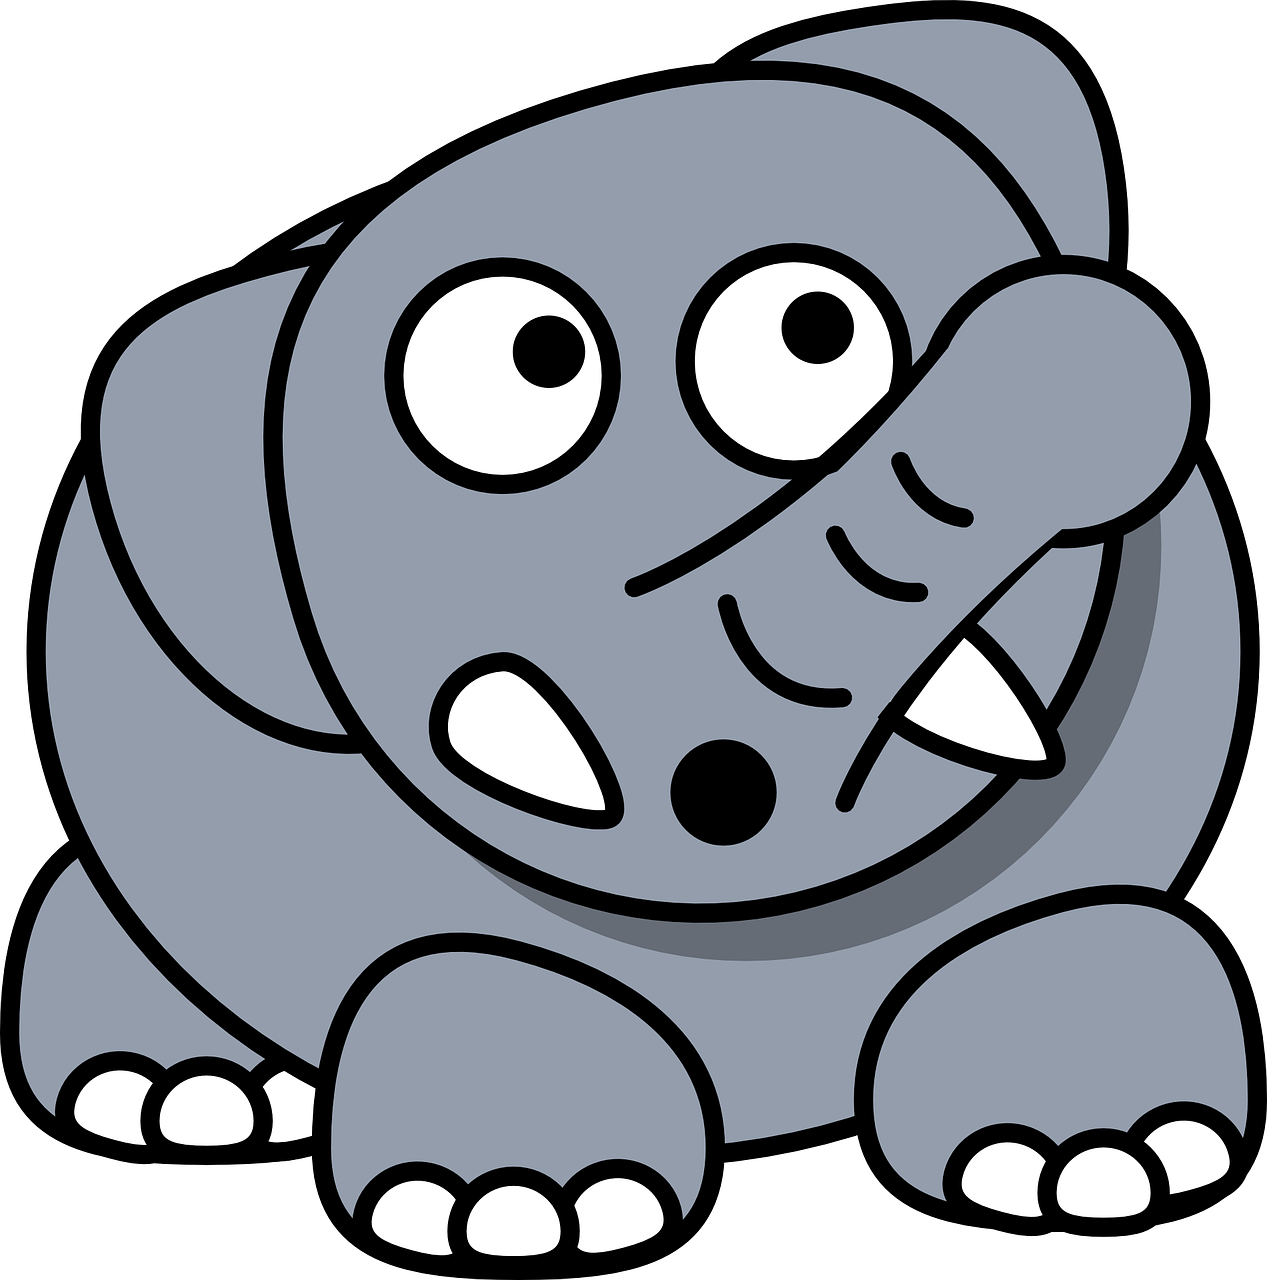 Free Vector Graphic - Worried Elephant (1267x1280)